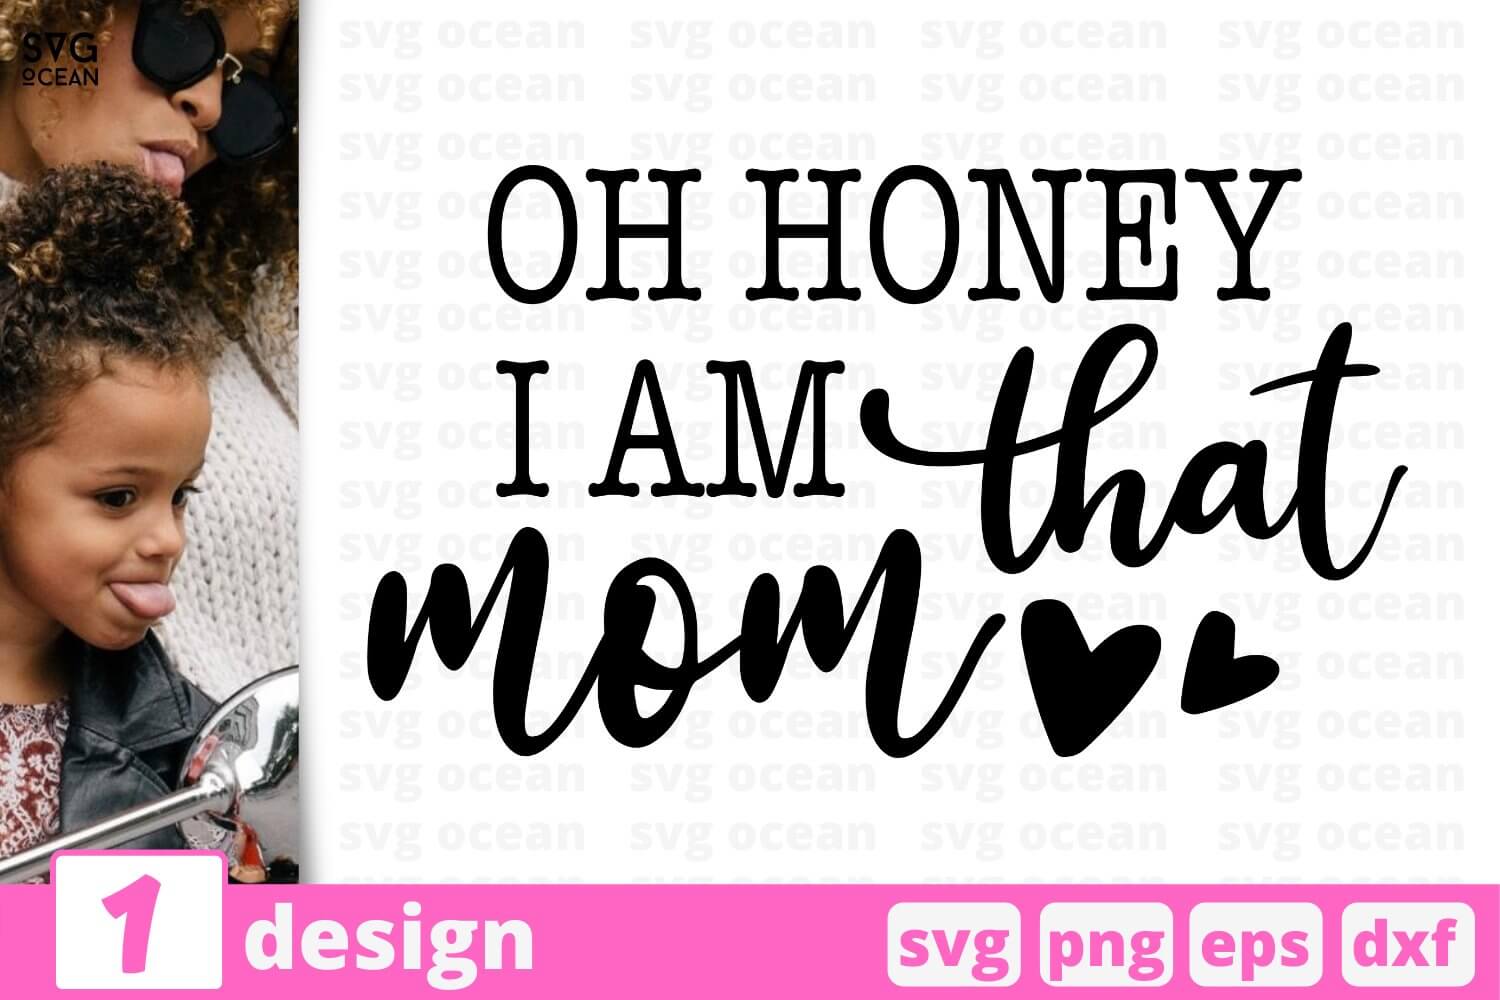 One of Design Oh Honey I am That Mom.